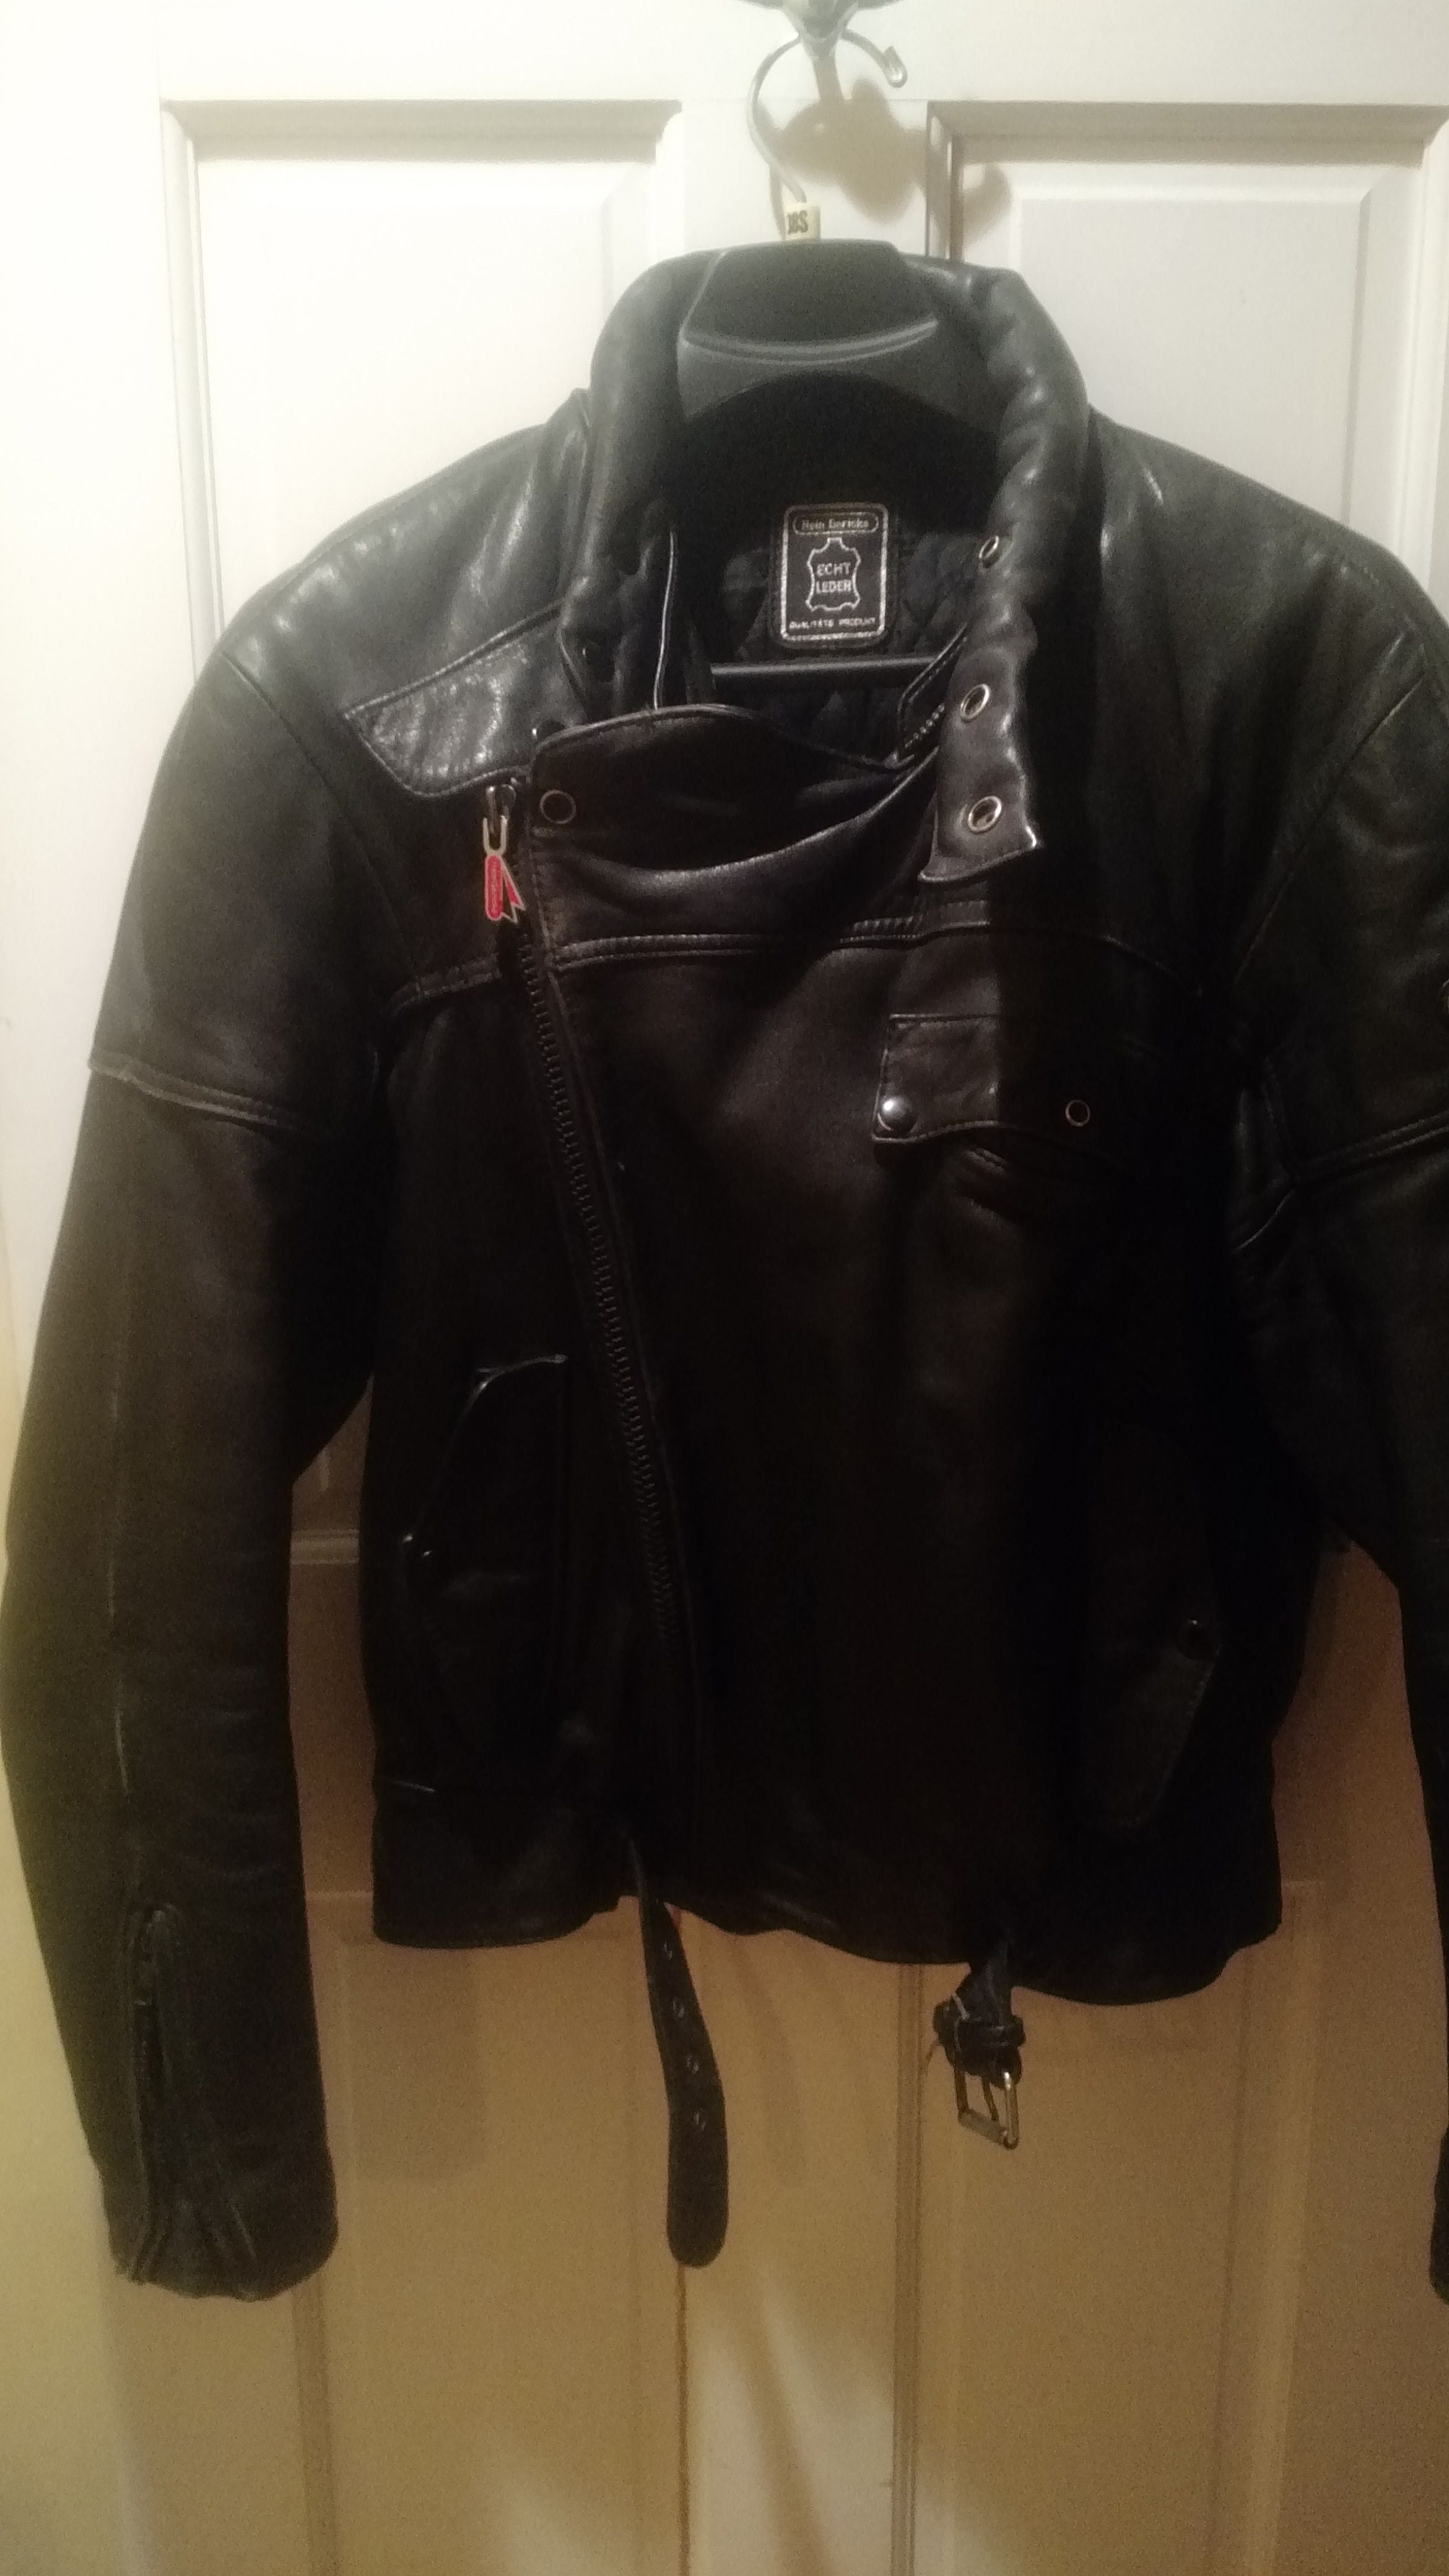 Hein Gericke motorcycle jacket size 52